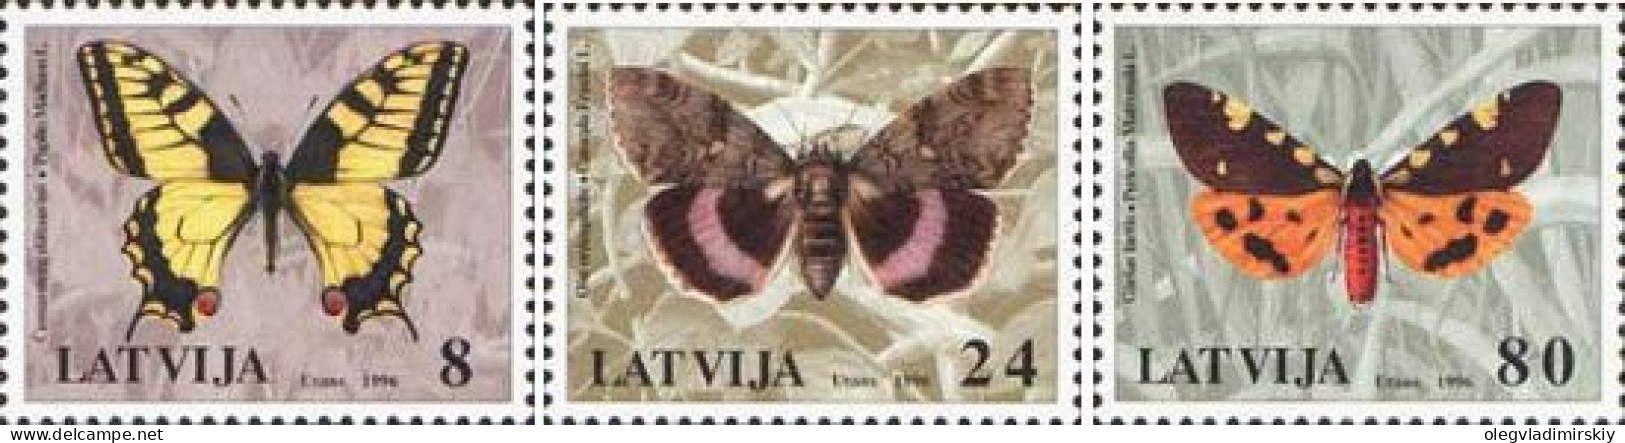 Latvia Lettland Lettonie 1996 Butterflies Set Of 3 Stamps MNH - Vlinders